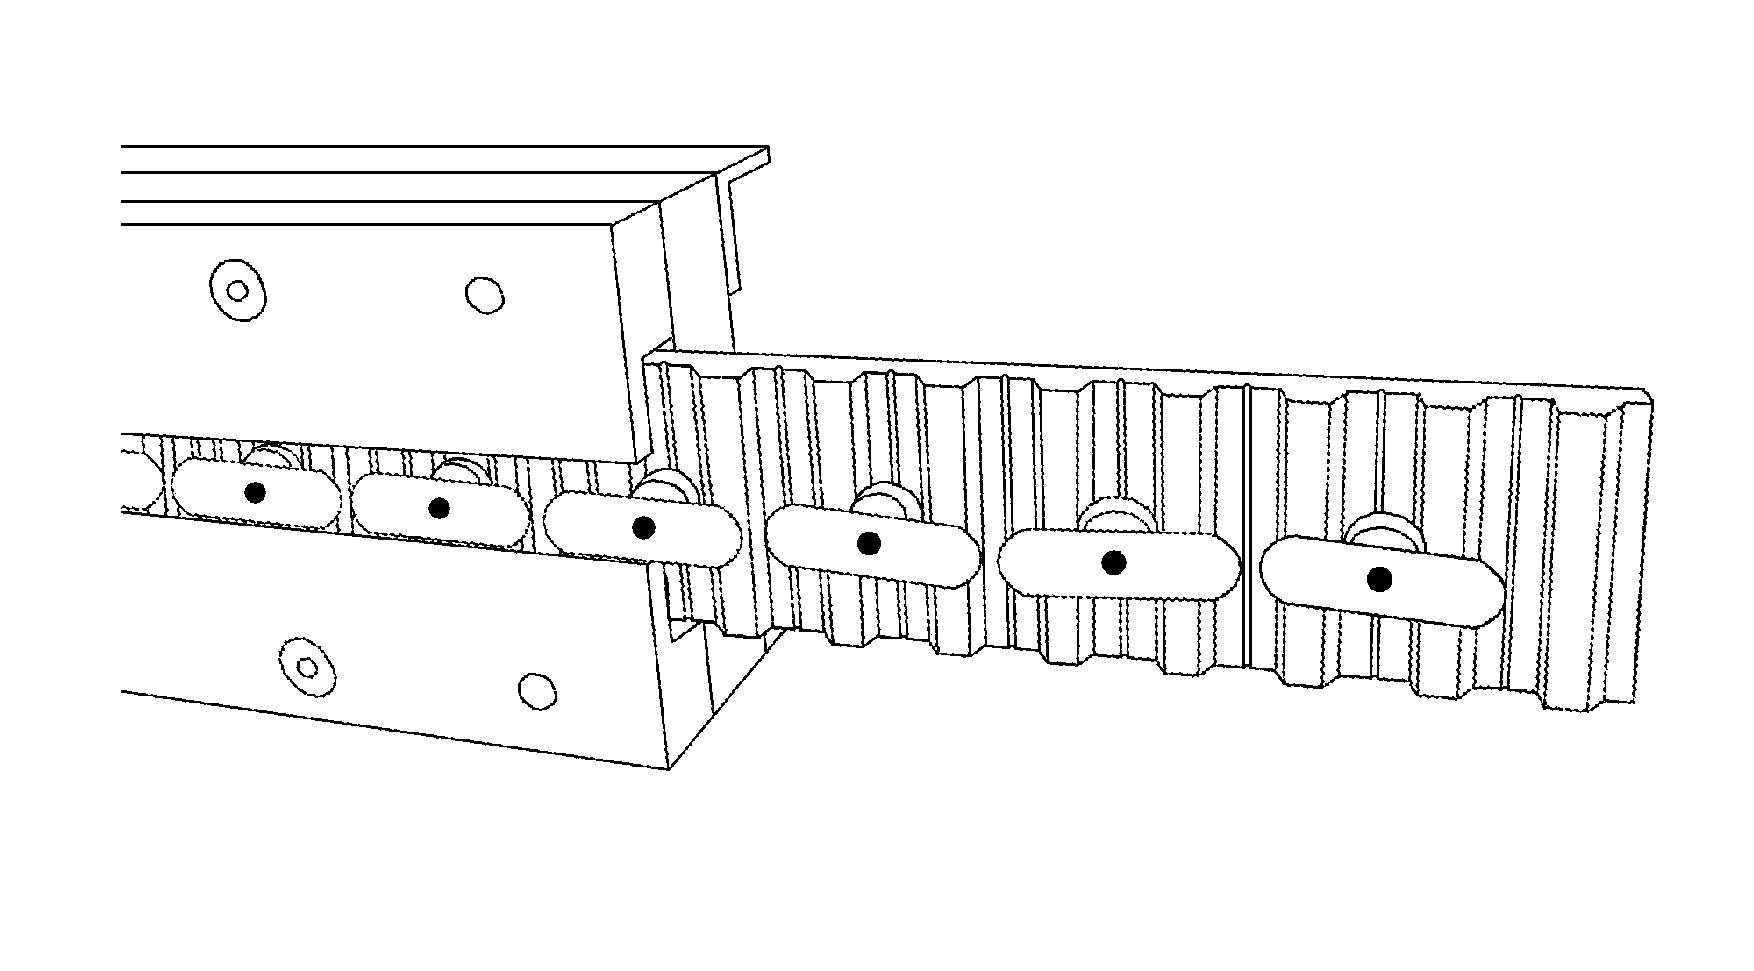 Inverted vacuum belt conveyor system